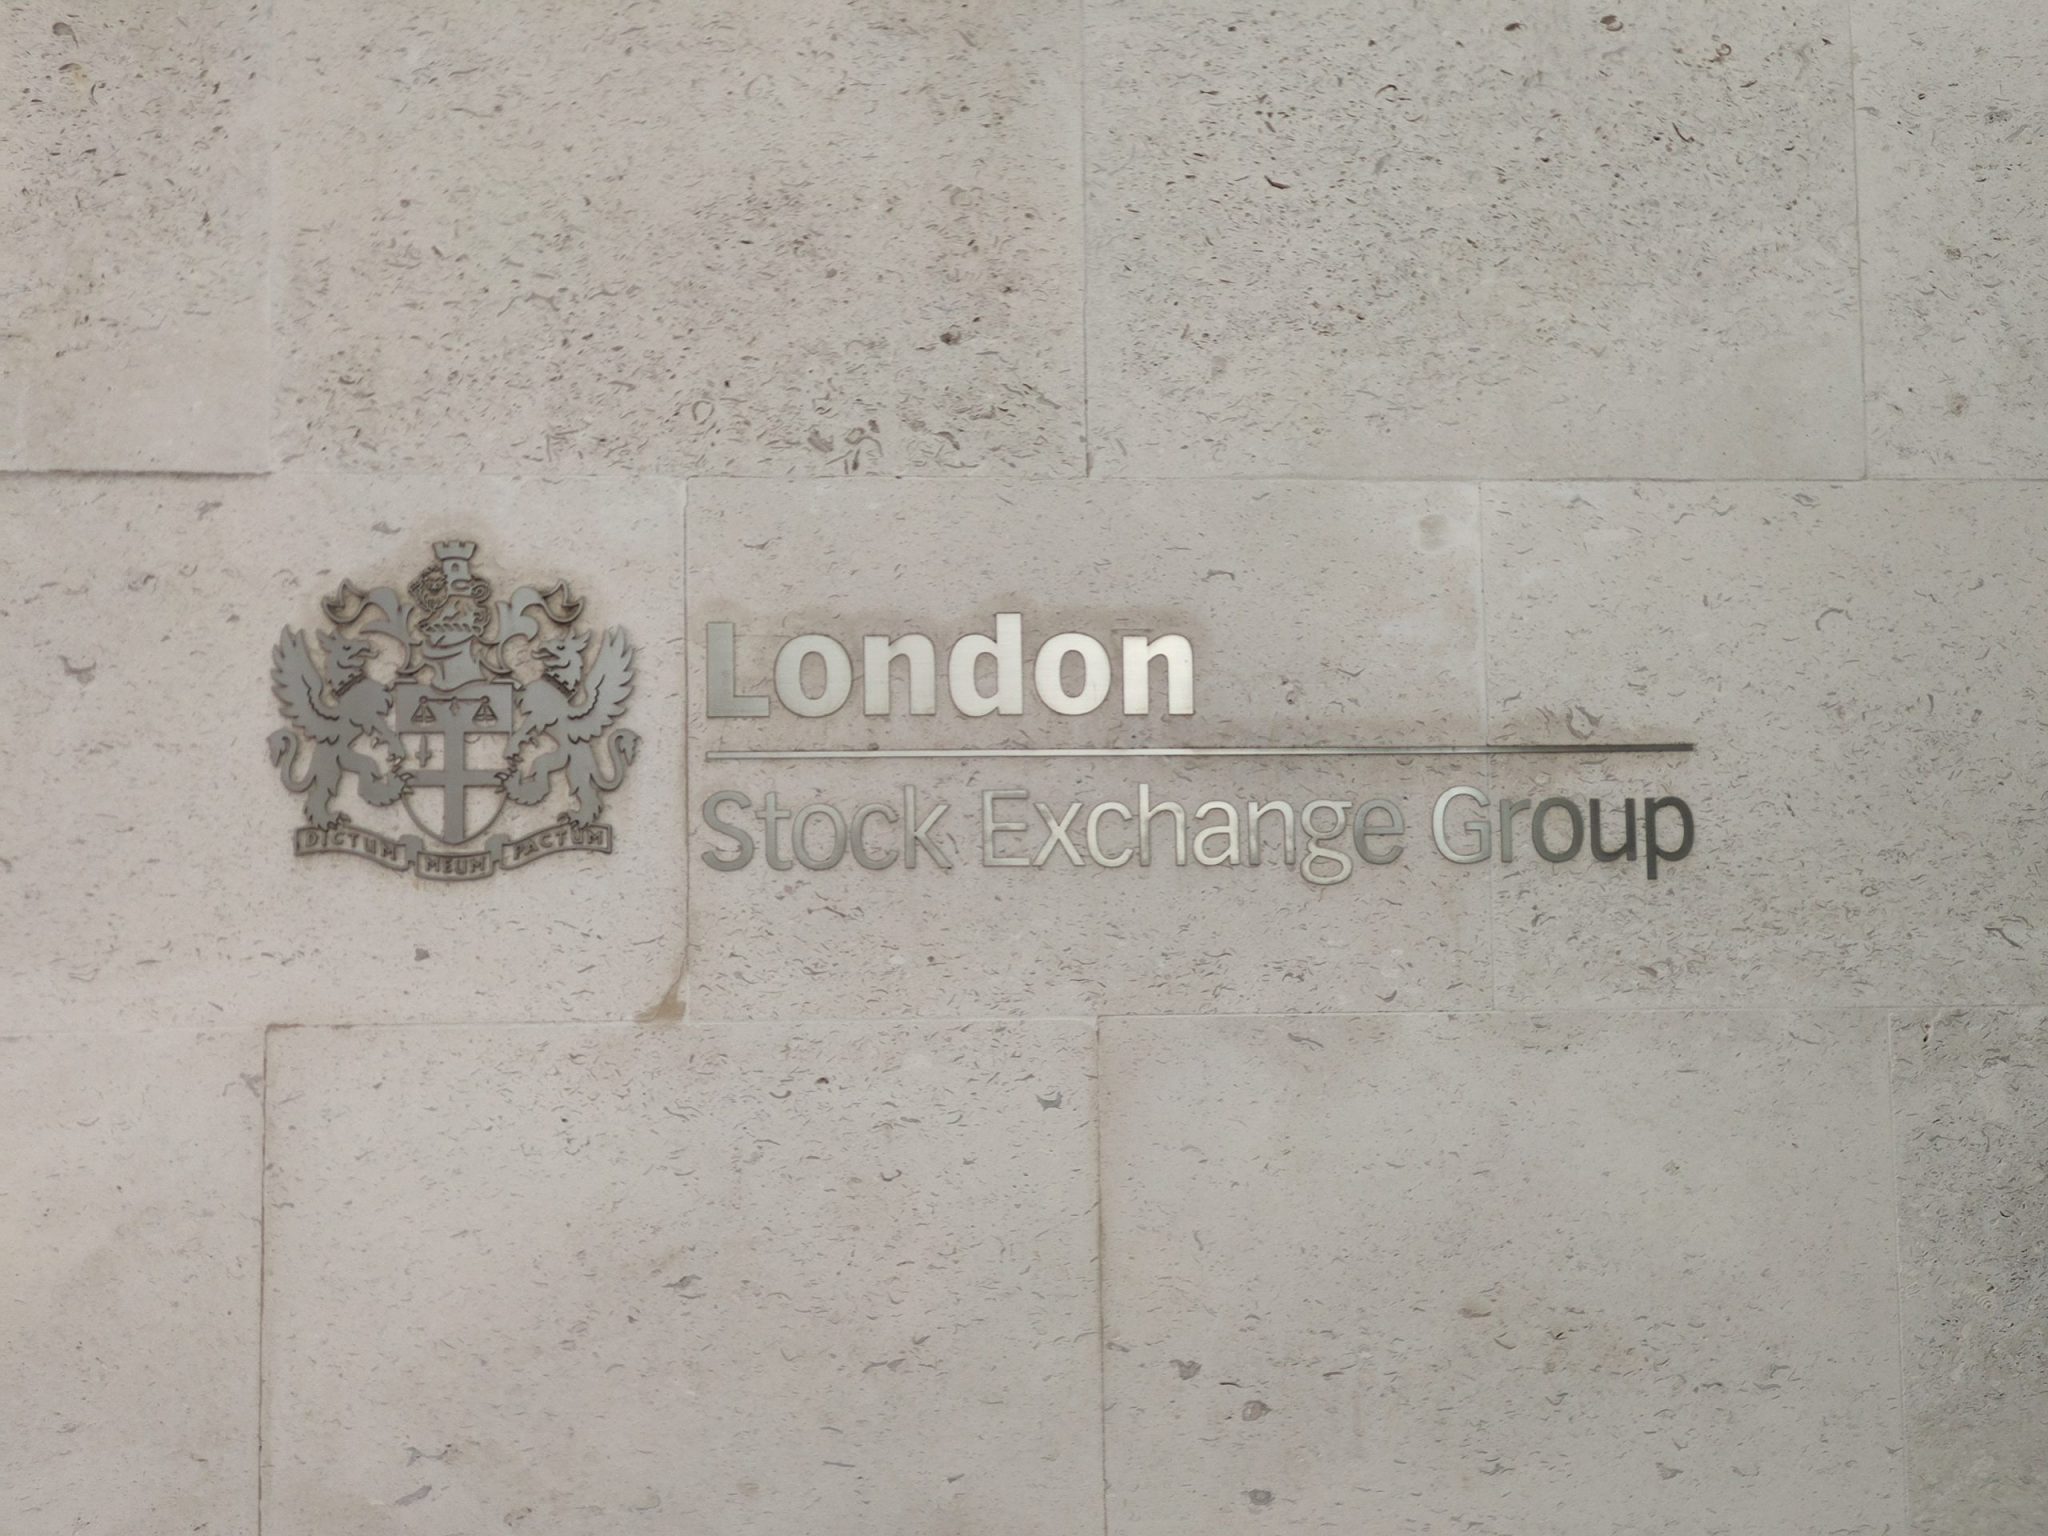 London Stock Exchange Group agrega capacidades de comercio de criptomonedas con la adquisición de TORA